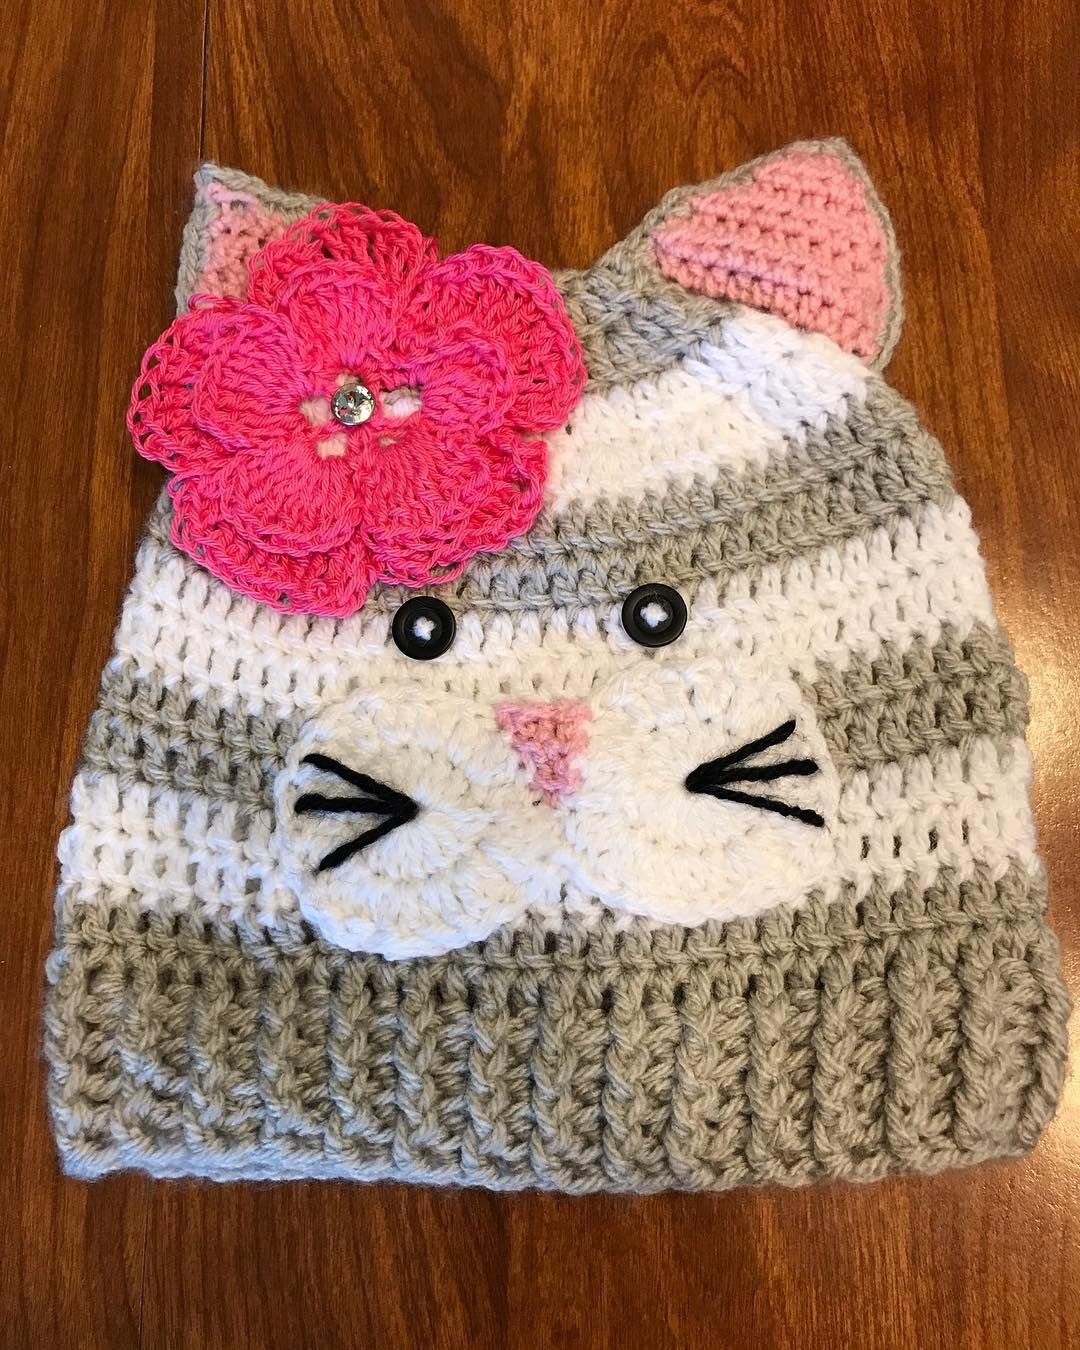 Crochet Winter Hat Free Pattern 41 Awesome Free Crochet Winter Hat Patterns Ideas Images For 2019